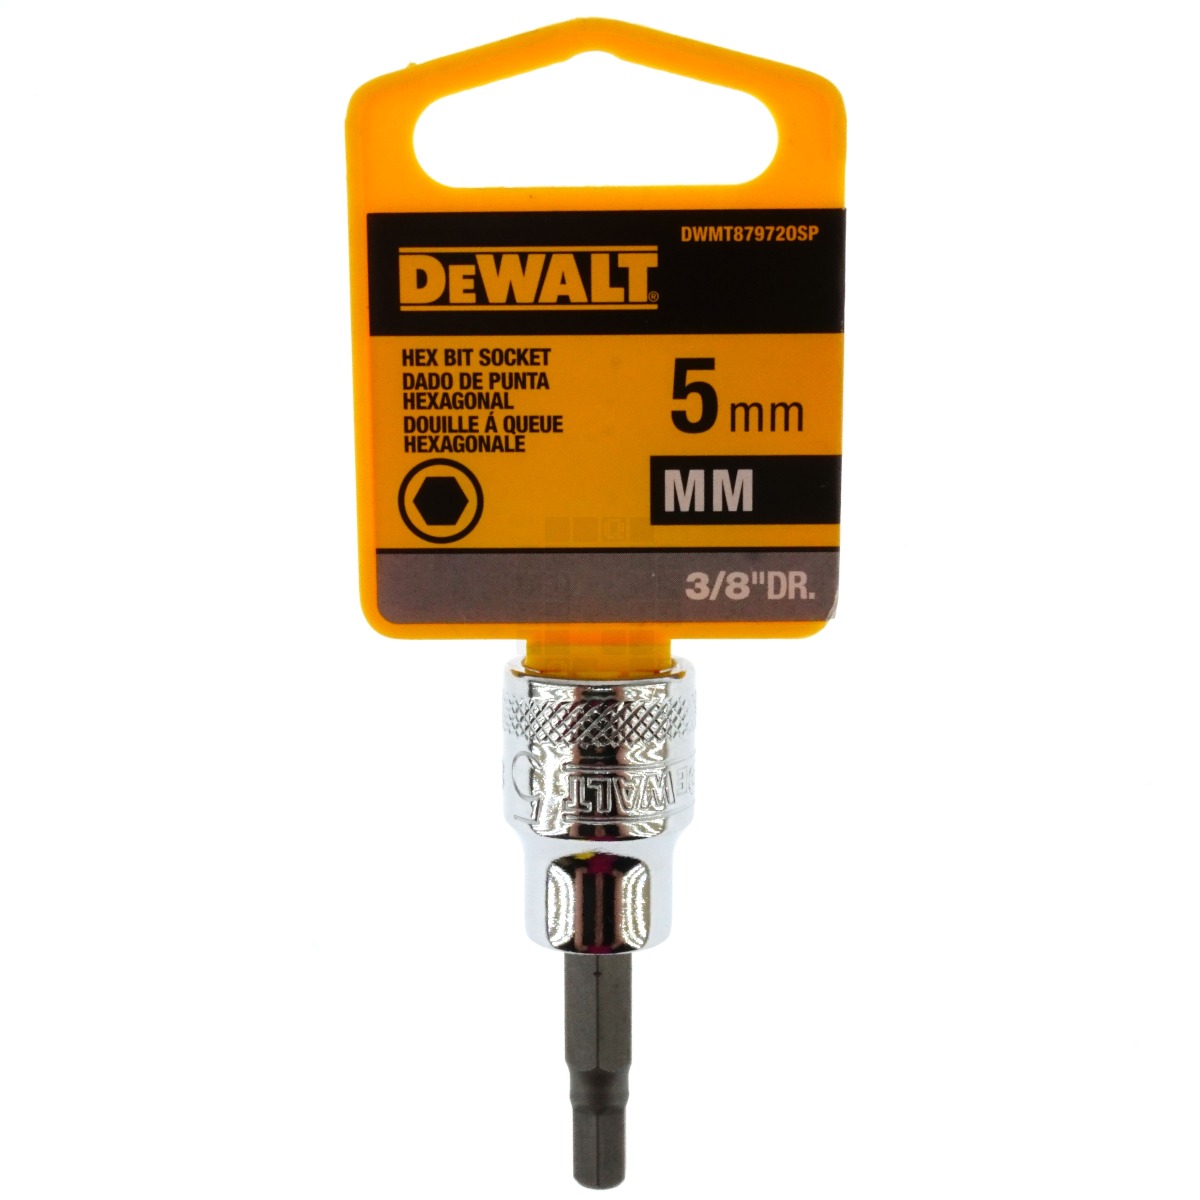 Dewalt DWMT87972OSP 5mm Chrome Hex Bit Socket, 3/8" Drive, 87-972D